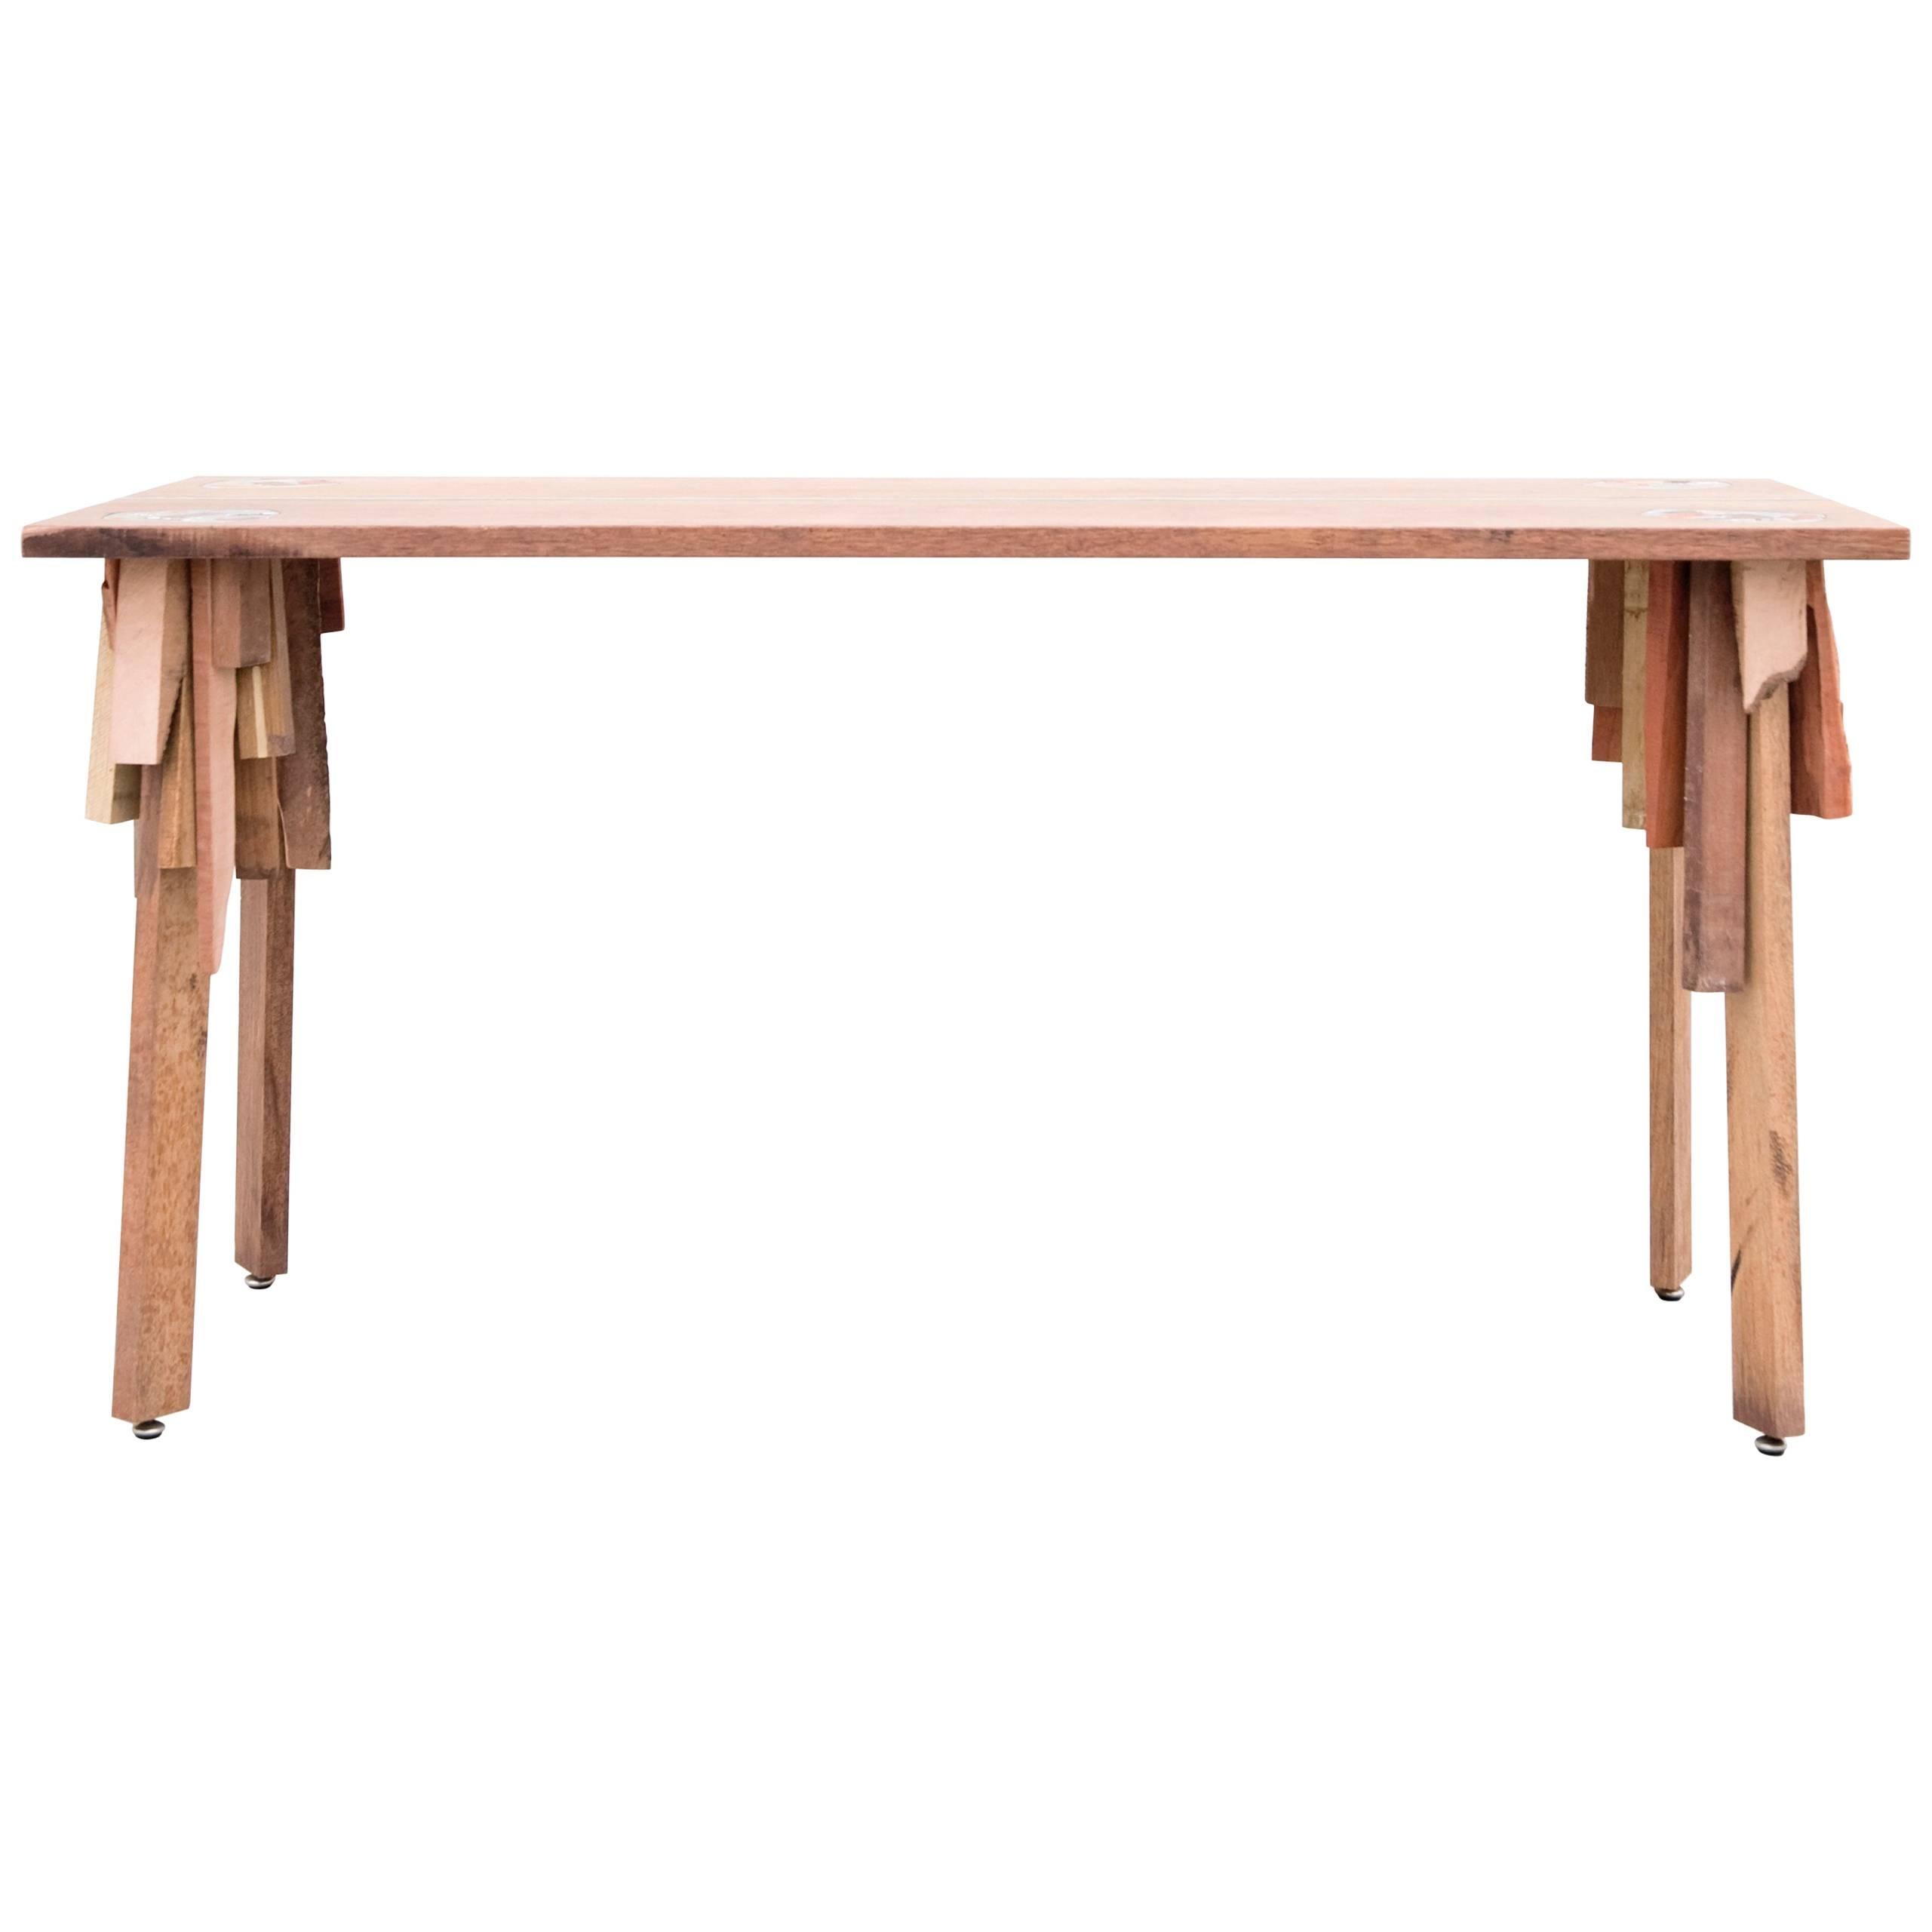 Bits of Wood Table by Pepe Heykoop For Sale